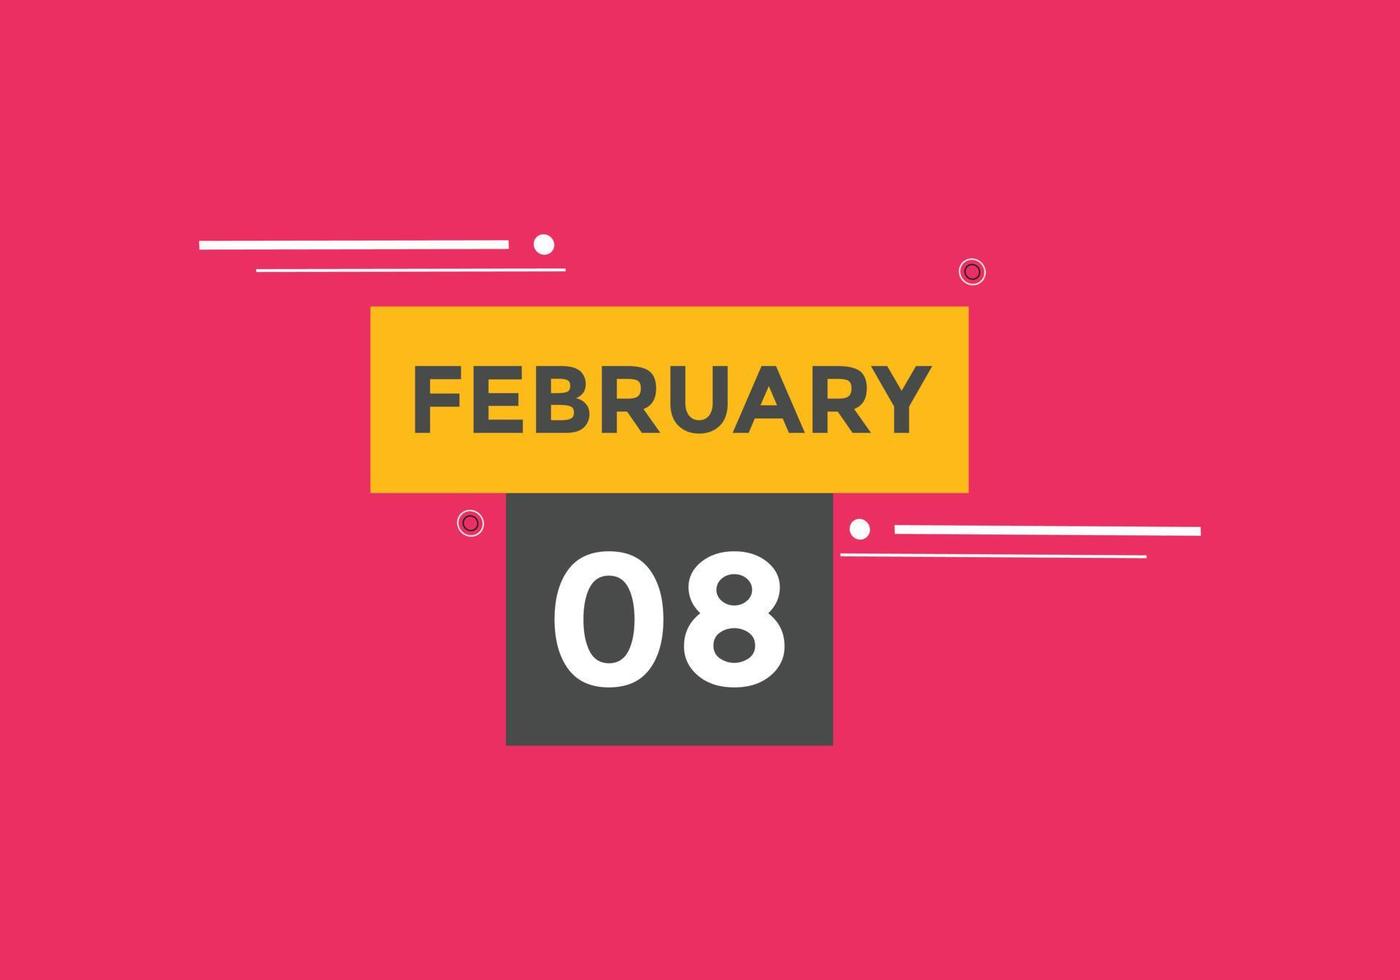 8. Februar Kalendererinnerung. 8. februar tägliche kalendersymbolvorlage. Kalender 8. Februar Icon-Design-Vorlage. Vektor-Illustration vektor